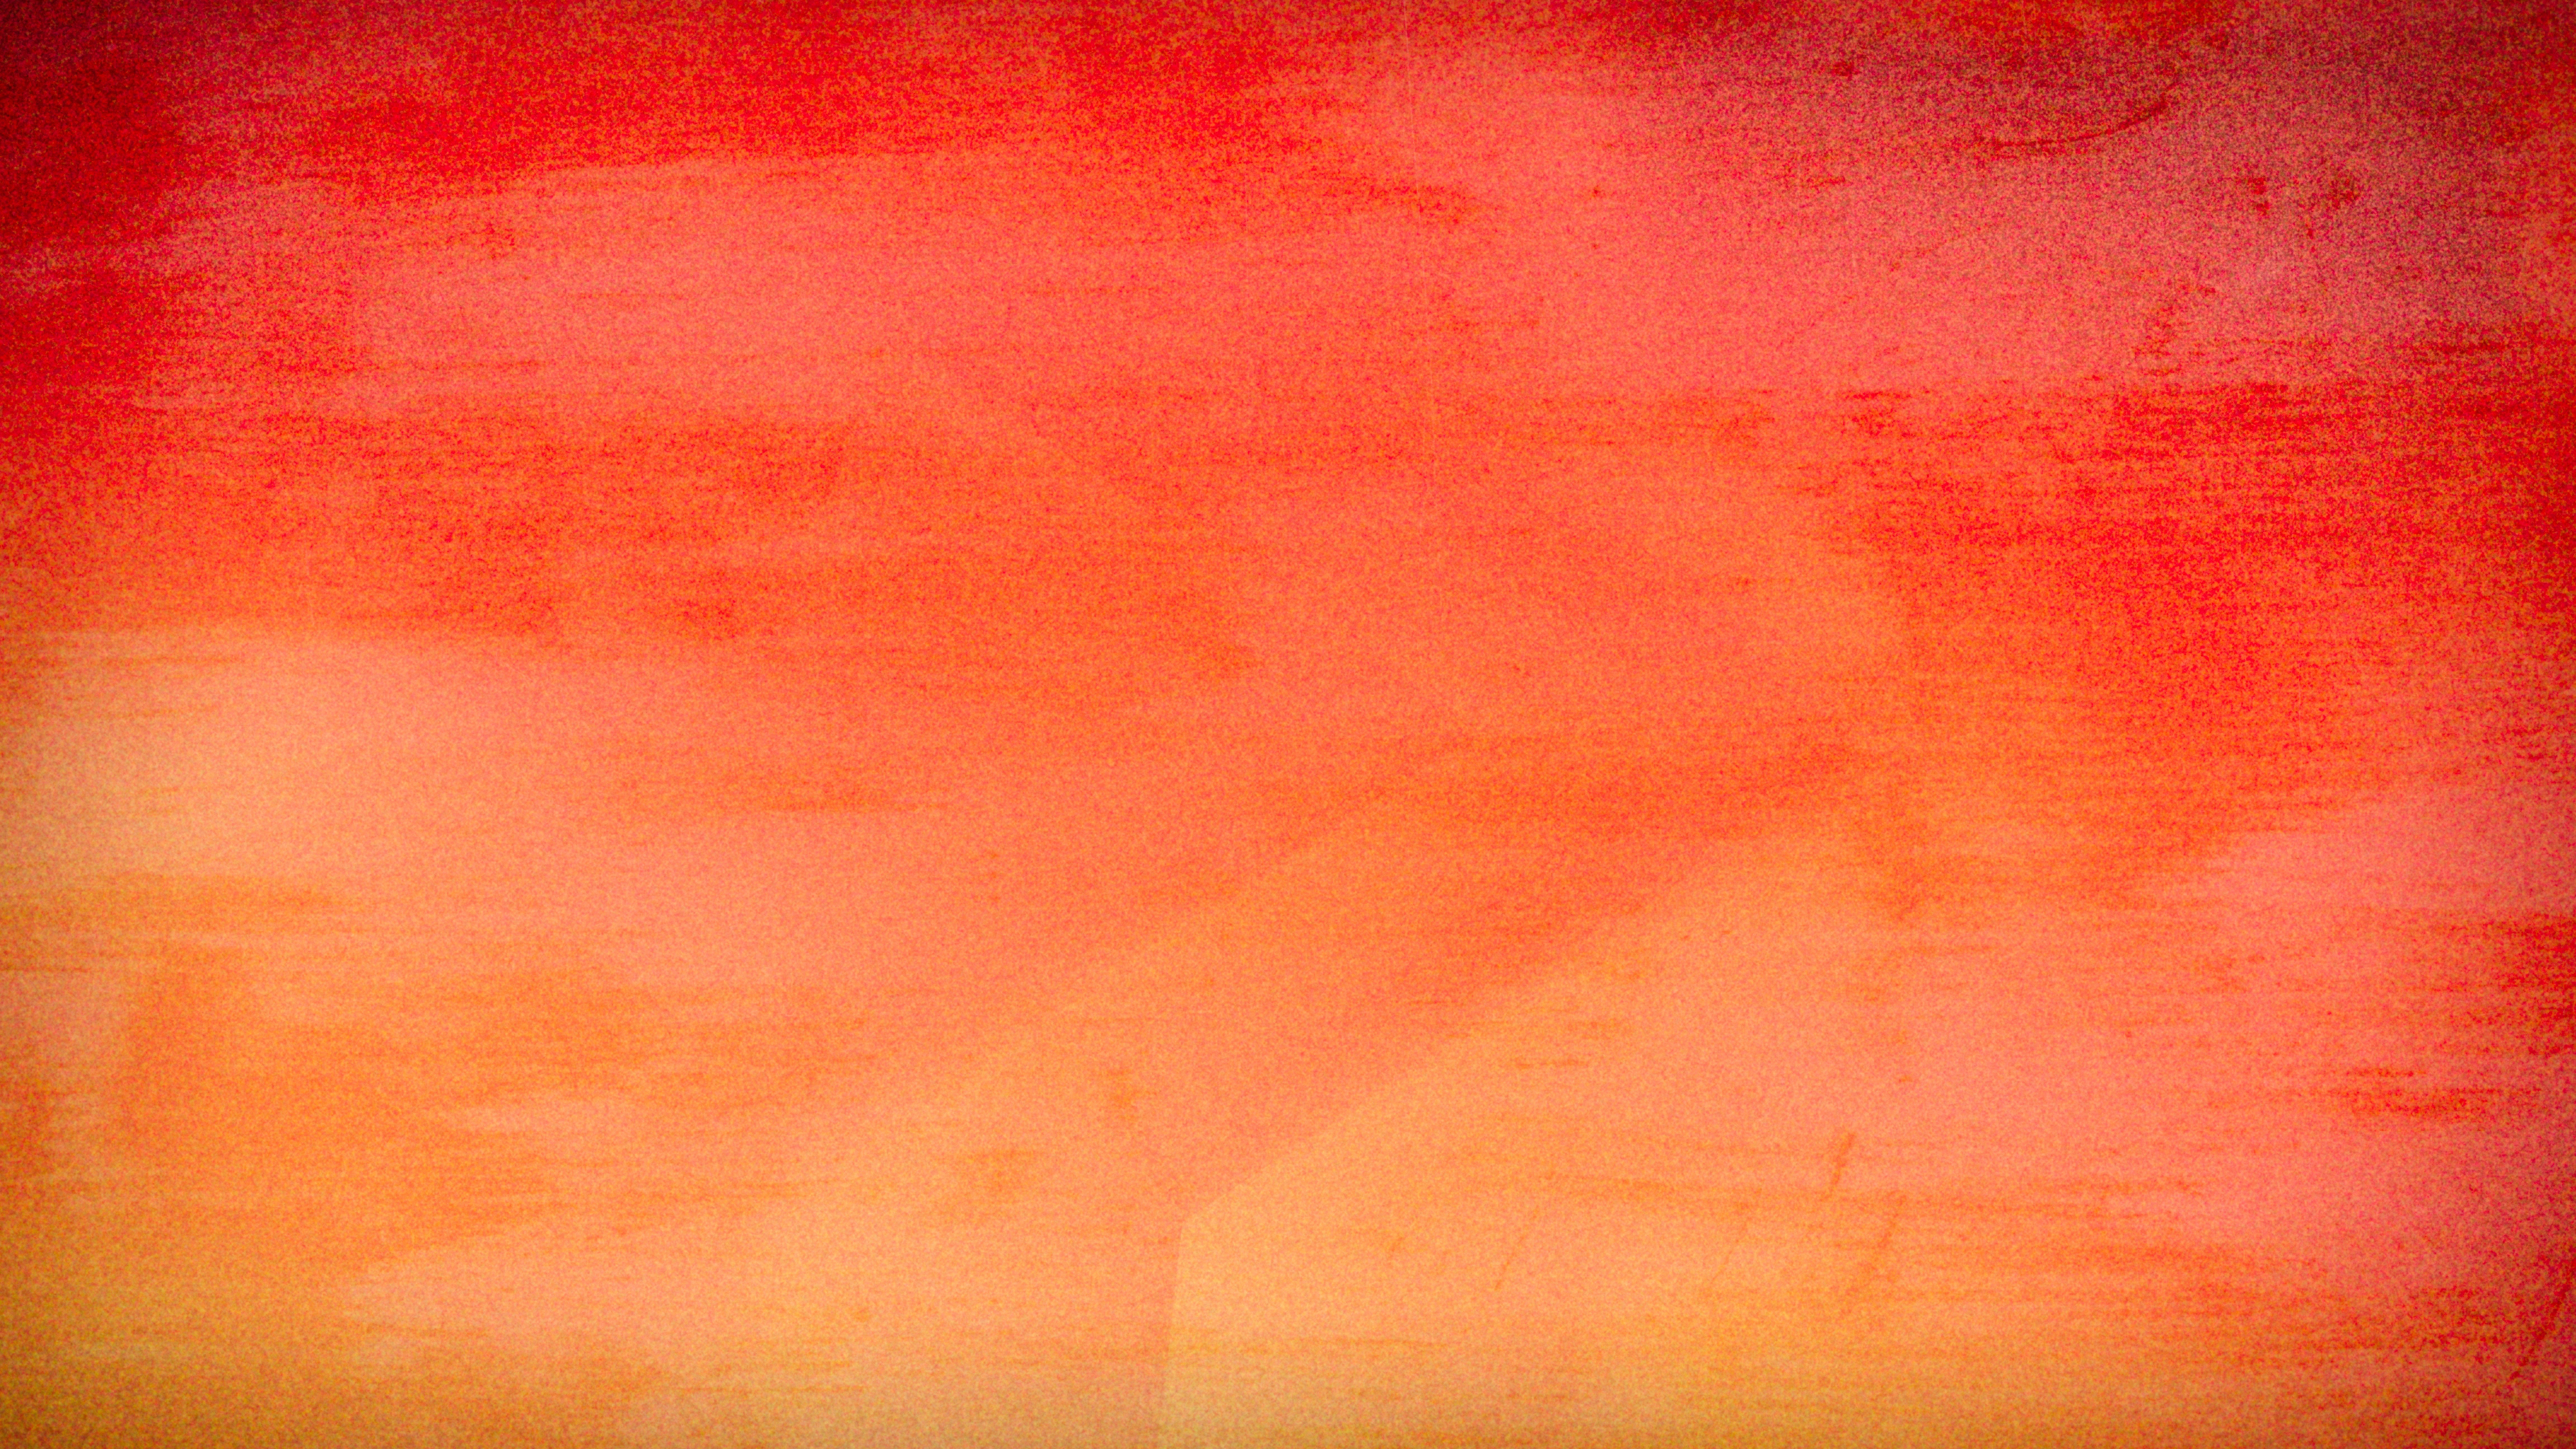 Red Orange Peach Free Background Image